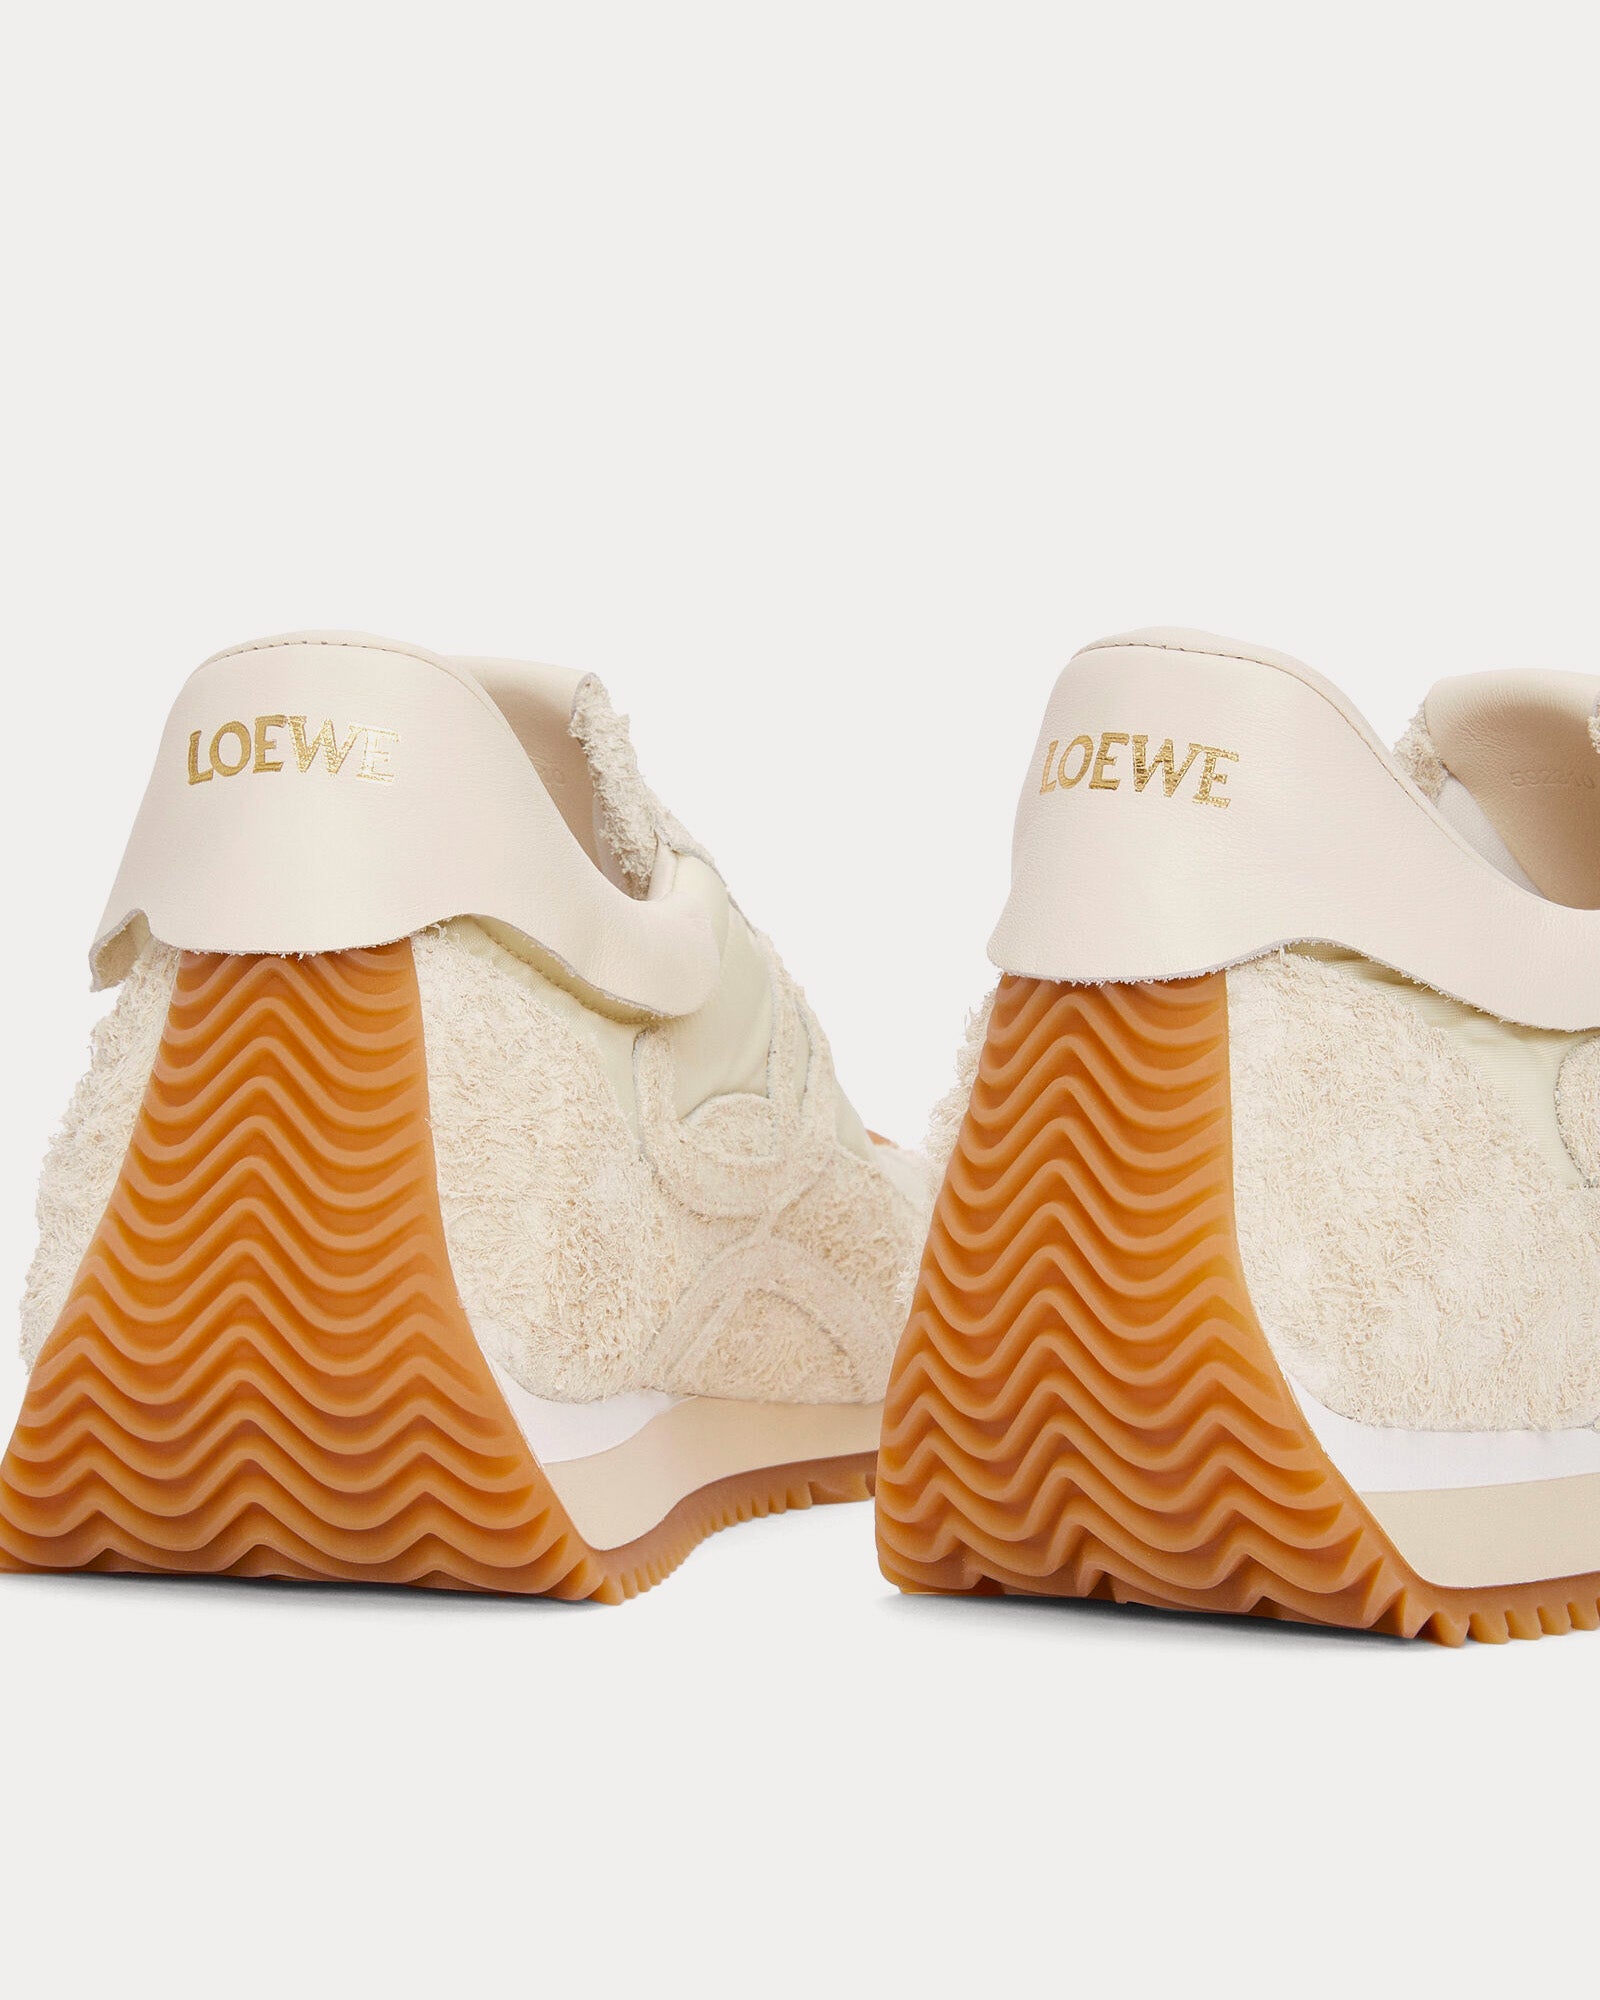 Loewe - Flow Runner Nylon & Suede Canvas / Soft White Low Top Sneakers